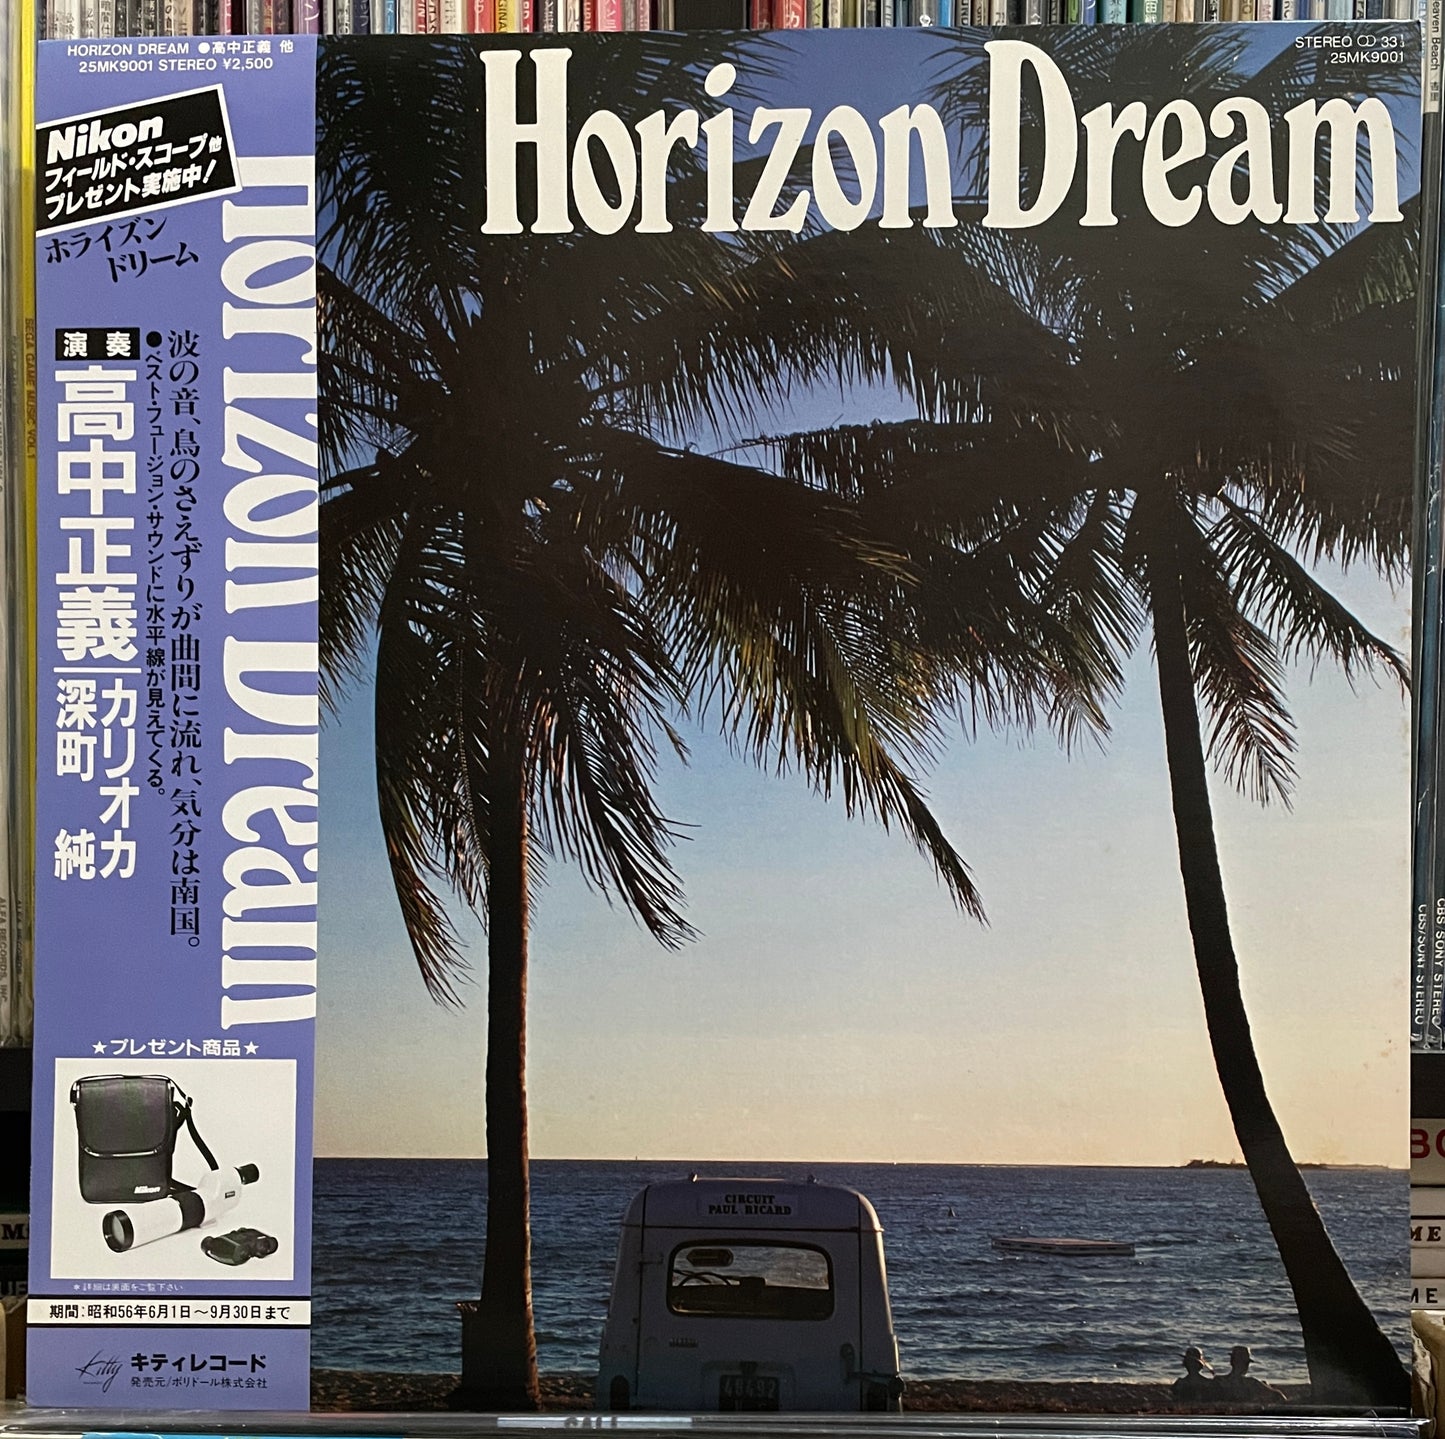 Masayoshi Takanaka “Horizon Dream” (1981)